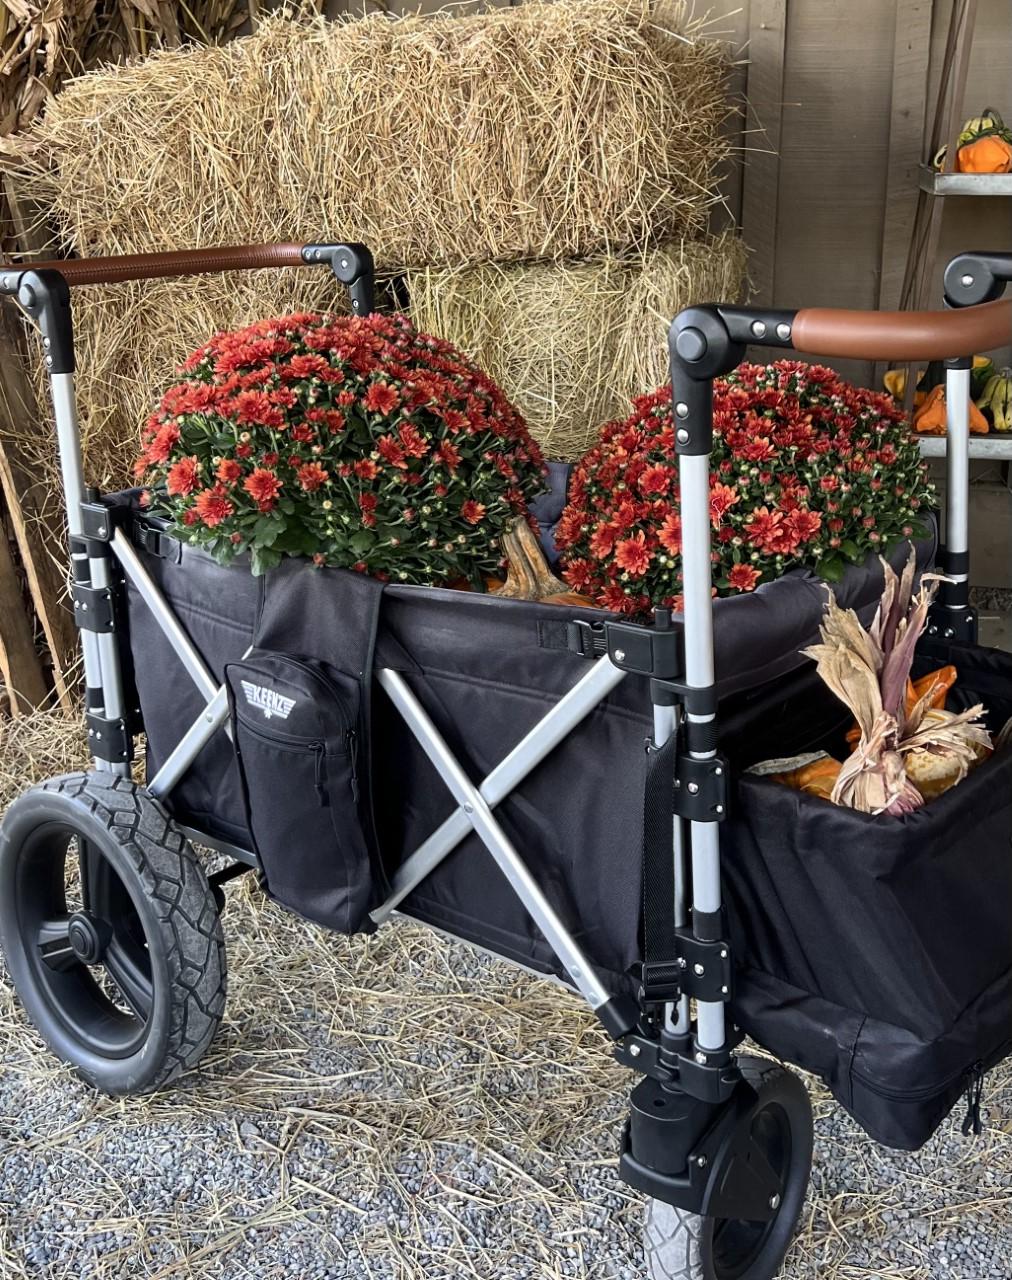 The Original Keenz 7S 2.0 - Ultimate Adventure Stroller Wagon - 2 Passenger